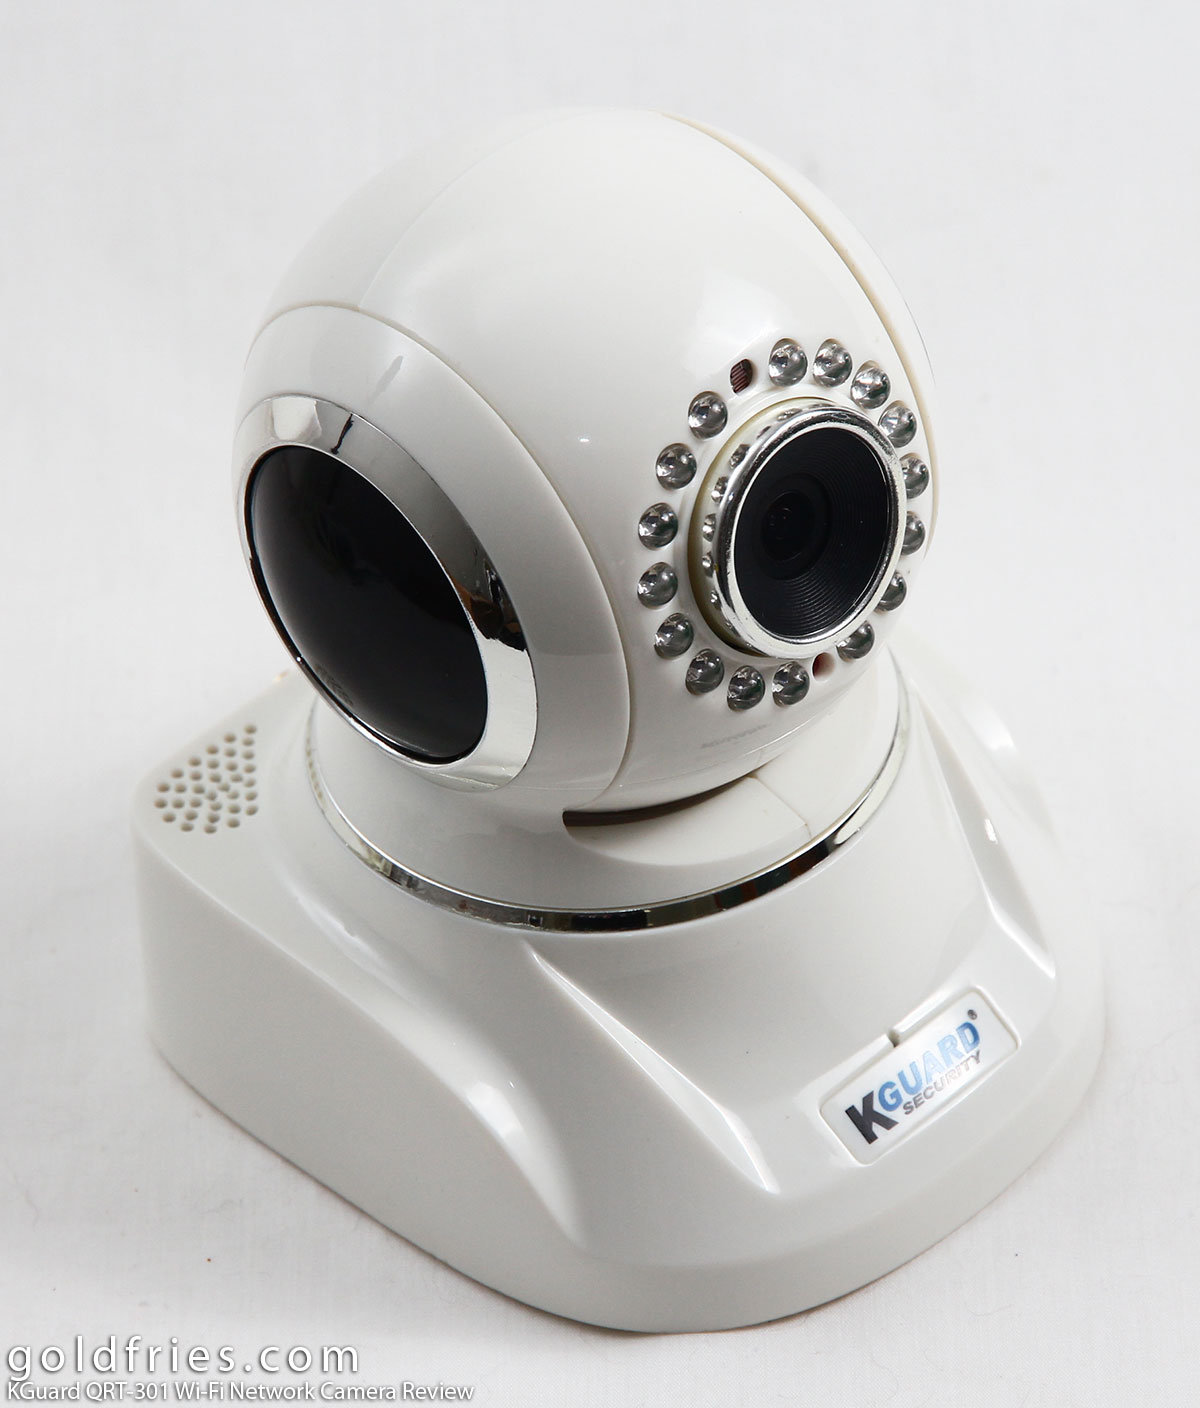 KGuard QRT-301 Wi-Fi Network Camera Review